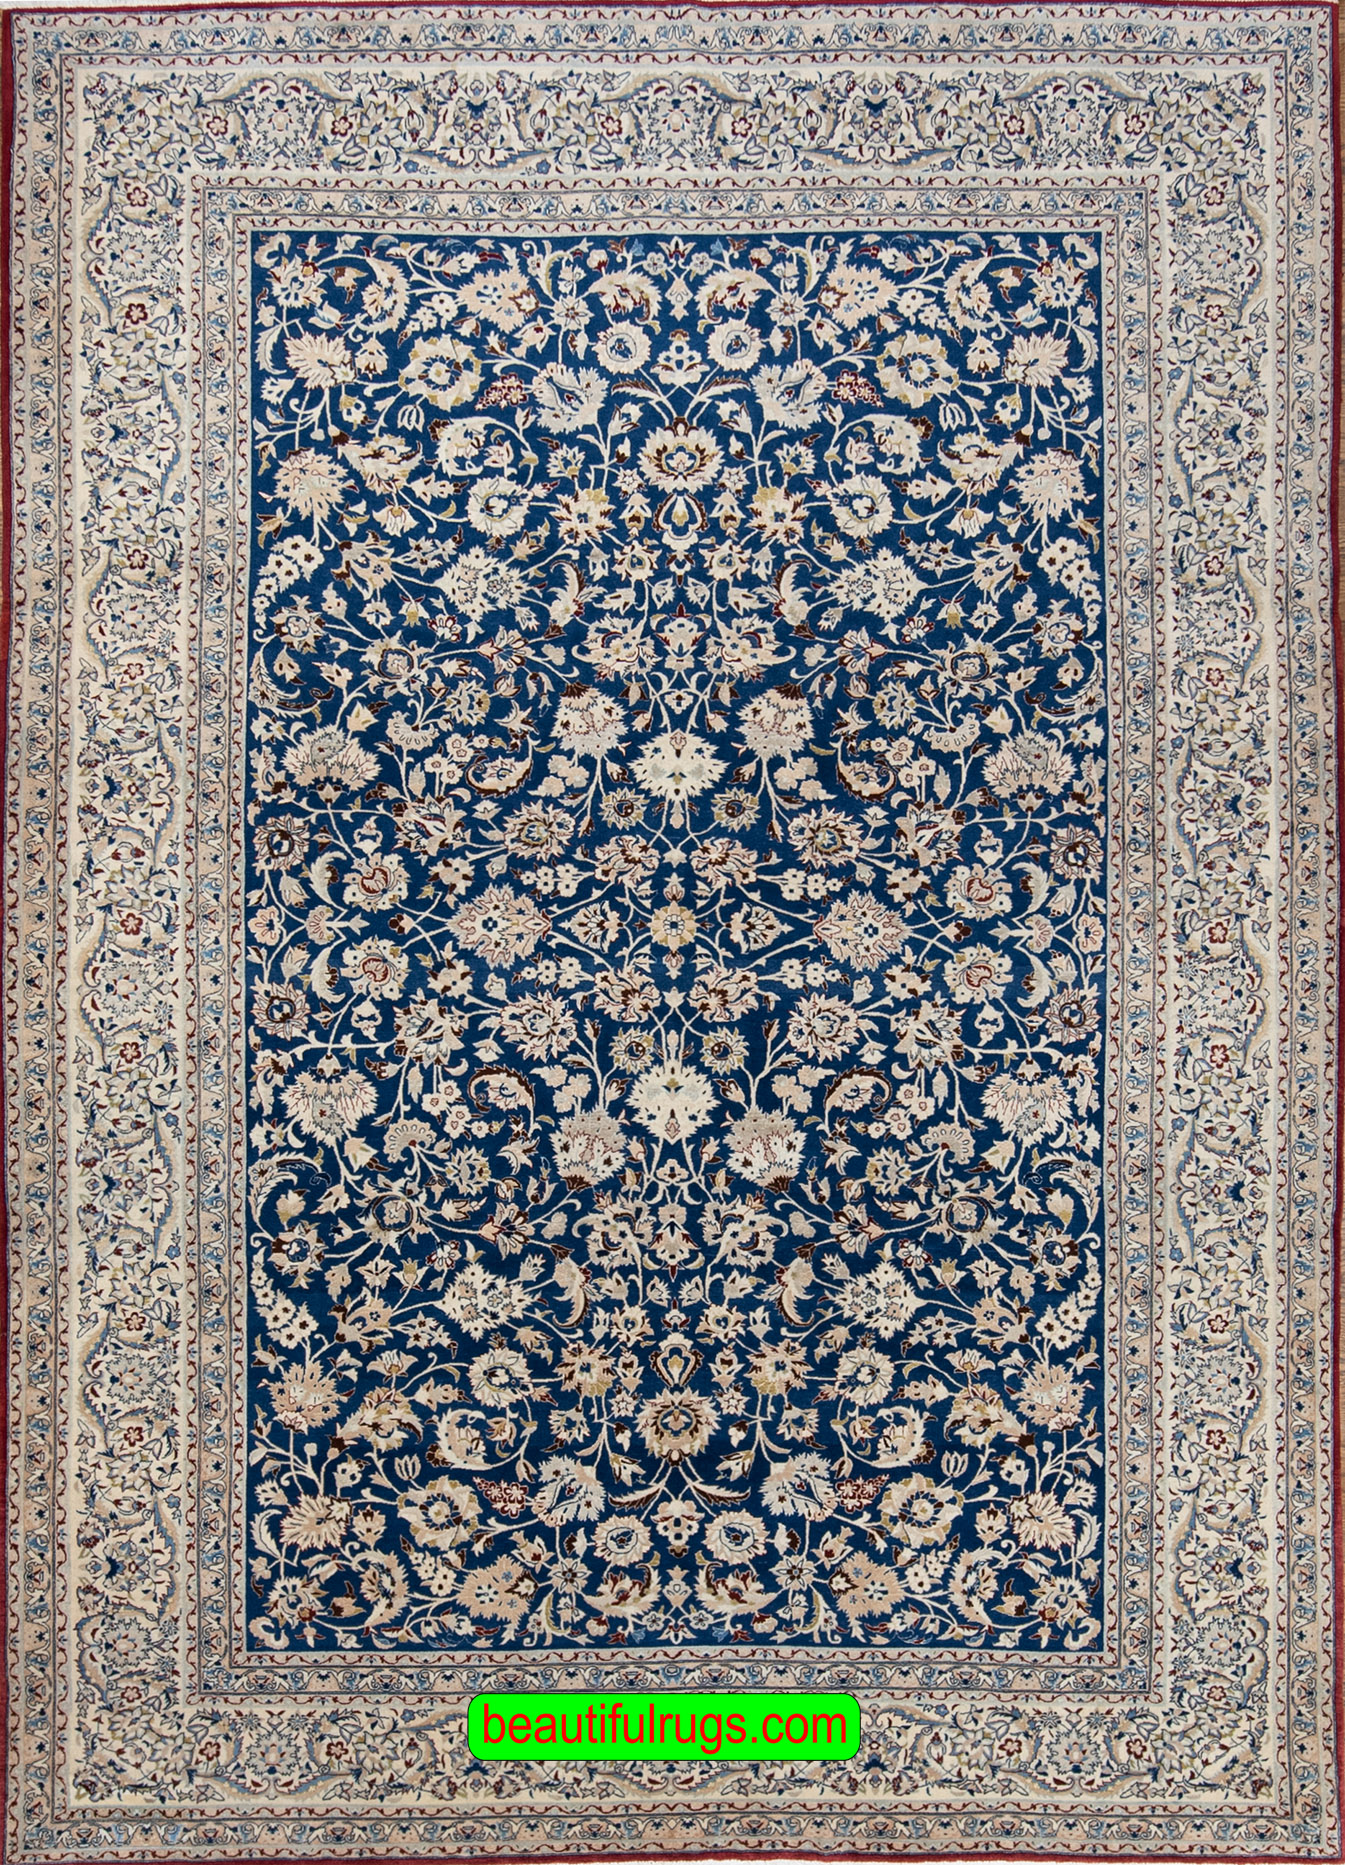 Persian Tudeshk rug, floral design in blue color. Size 7x10.3